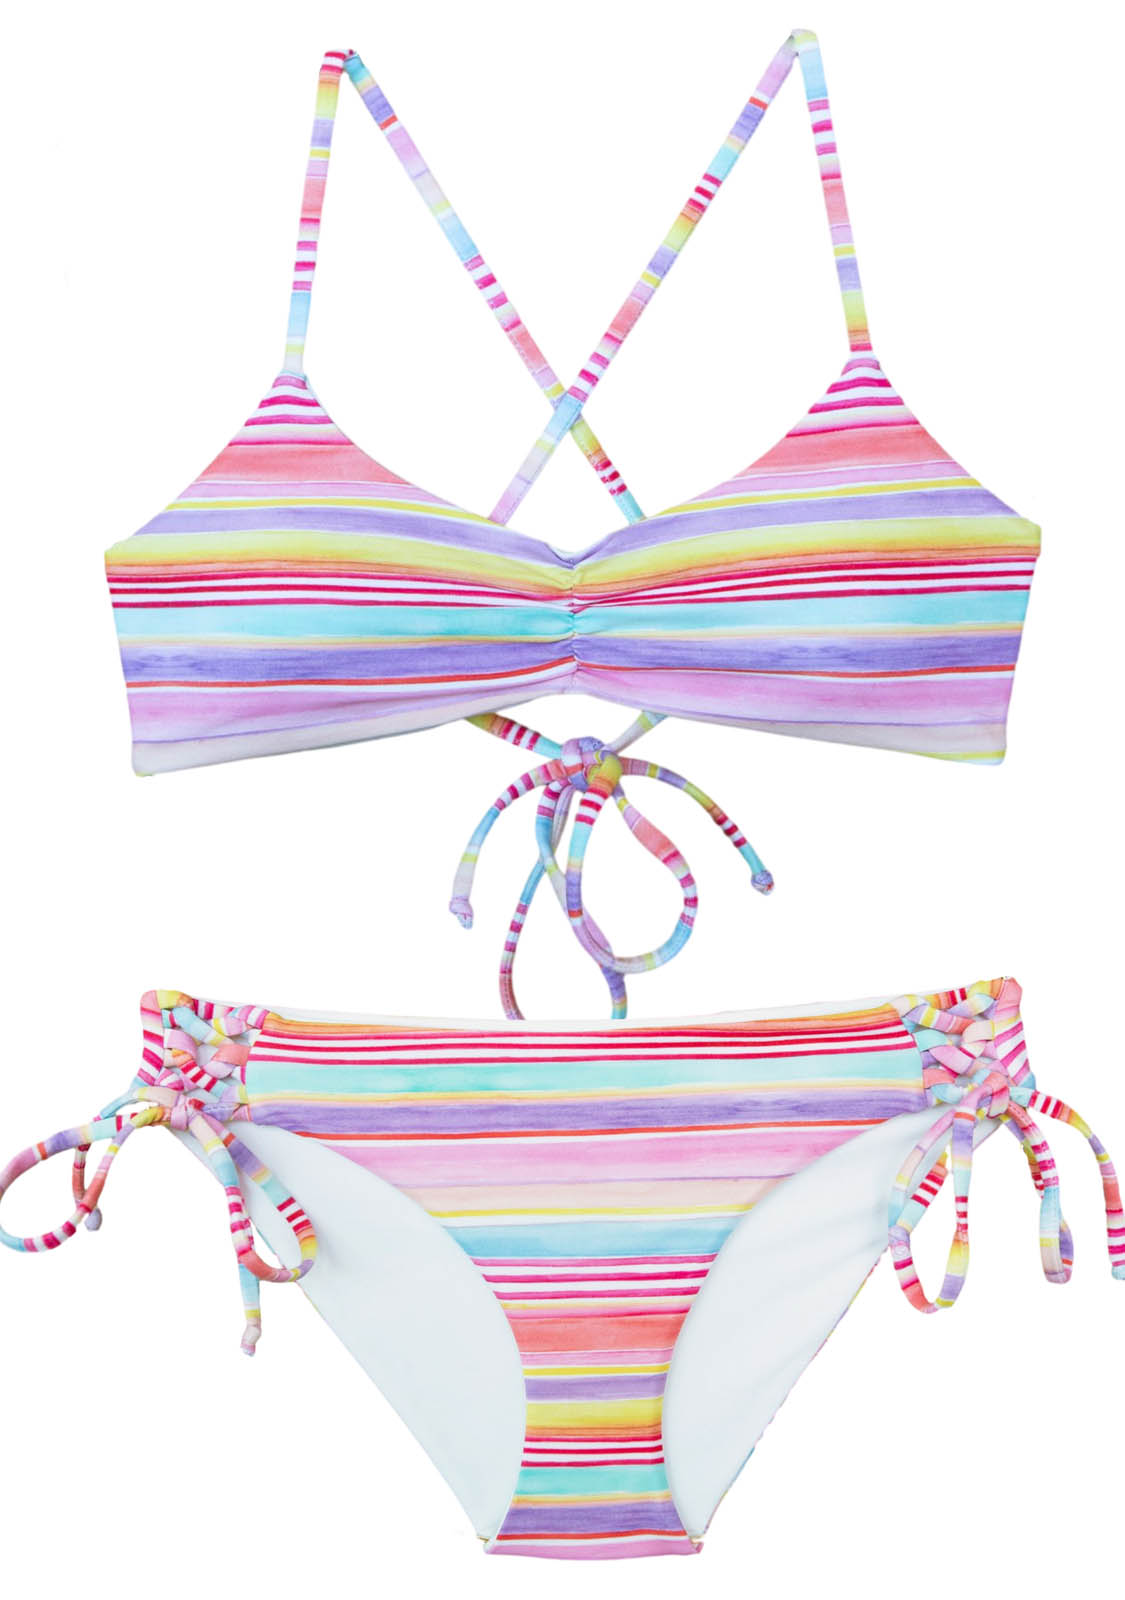 Bliss Bay two piece bikini colorful stripes by Chance Loves Swimwear, a brand from Laguna Beach, California